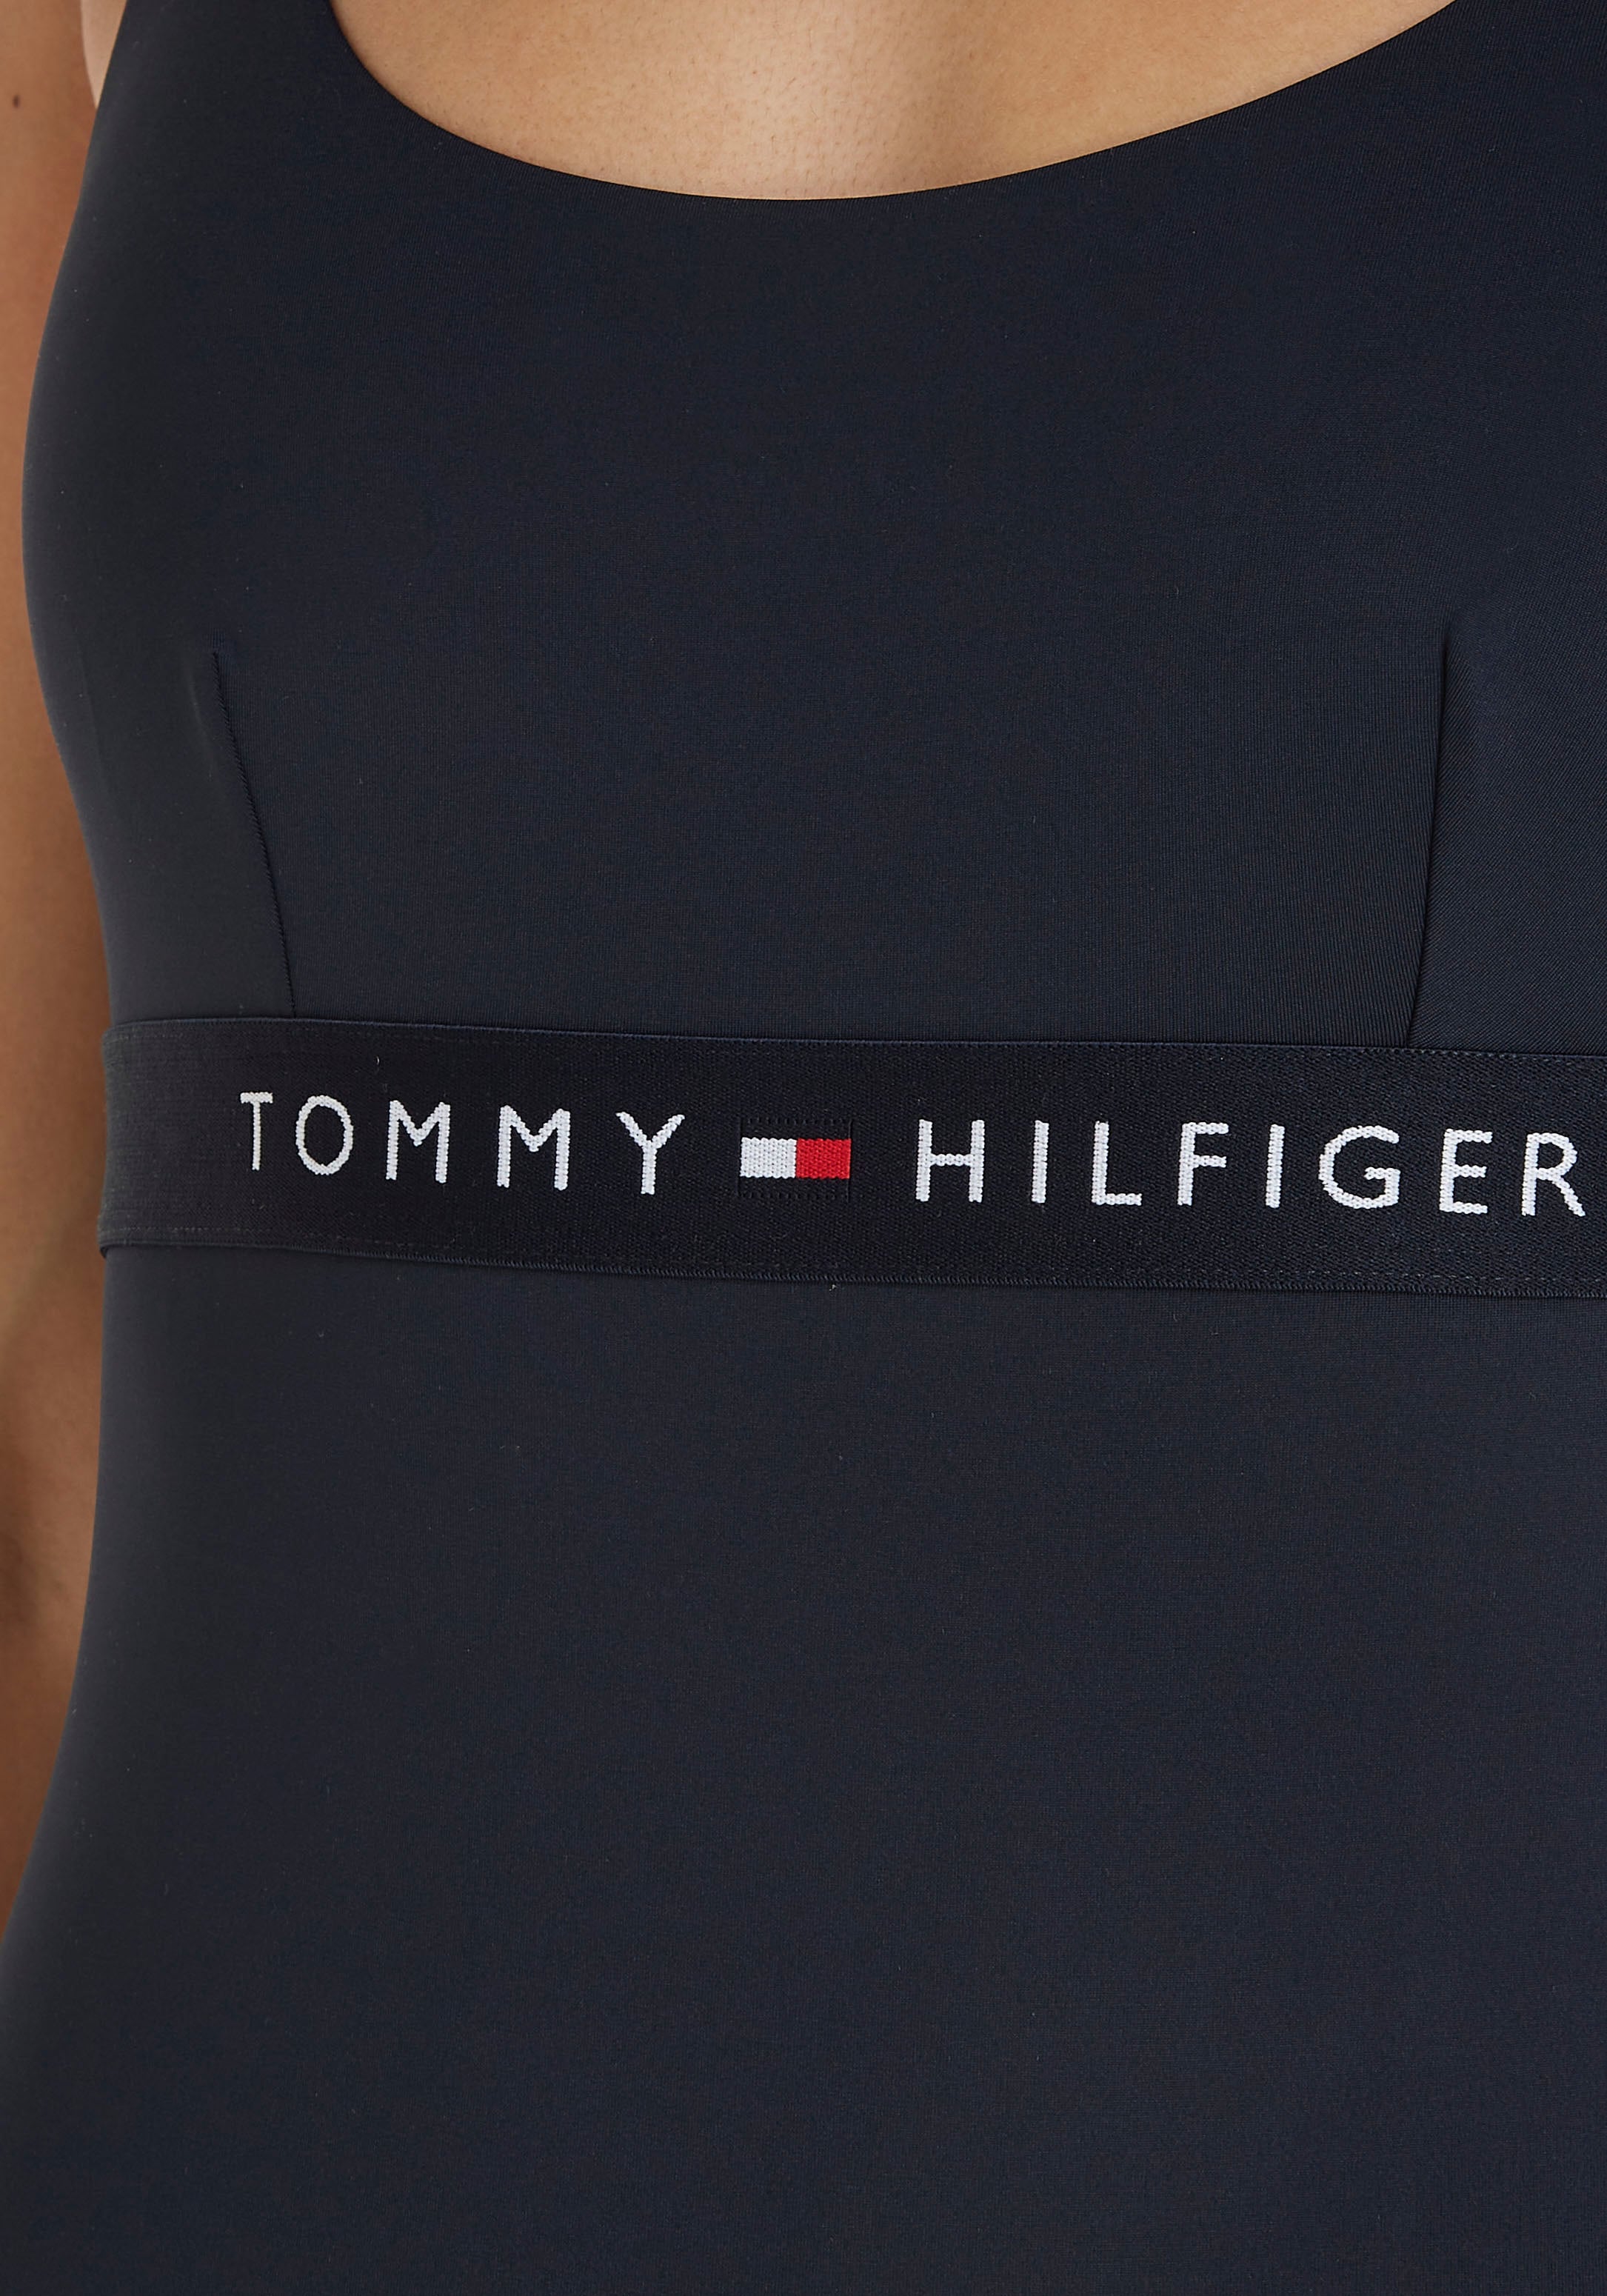 Tommy Hilfiger Swimwear Badeanzug »TH ONE PIECE«, mit Tommy Hilfiger-Branding